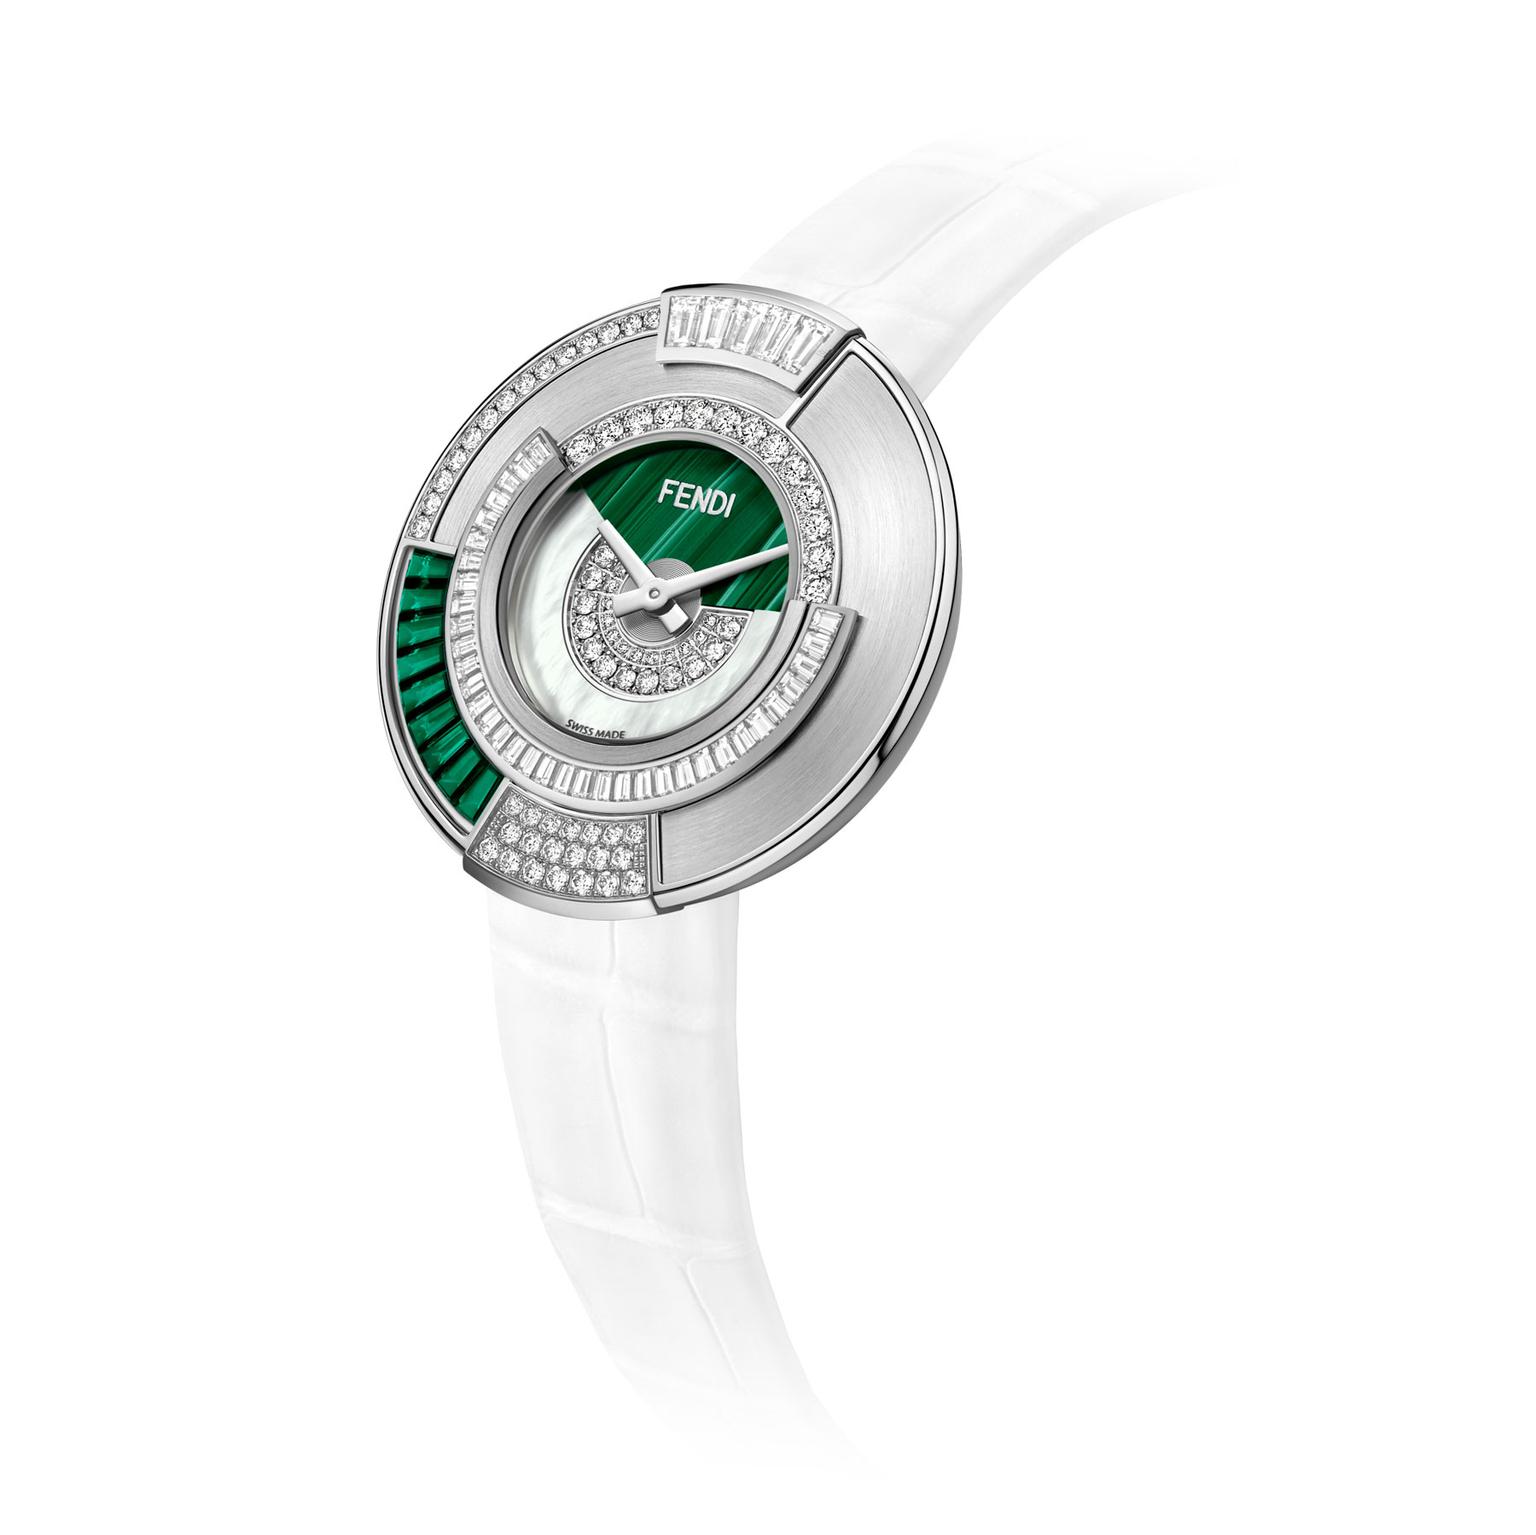 Fendi Policromia watch in white gold with emeralds, malachite and diamonds